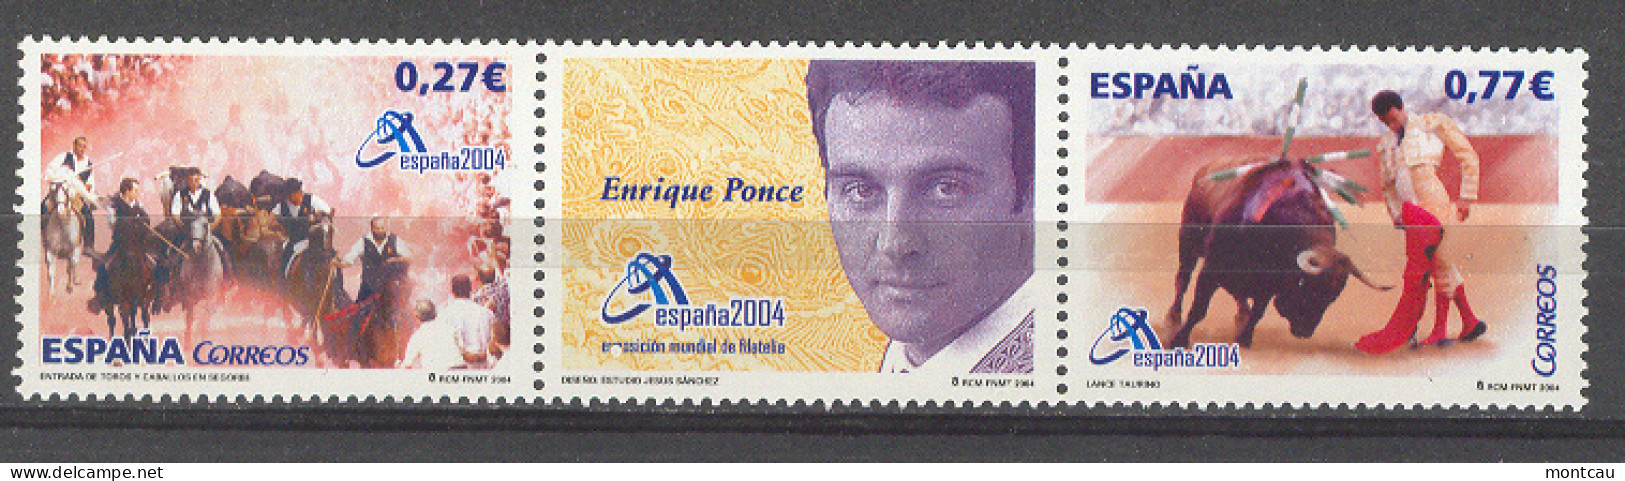 Spain 2004 -Expo Mundial Filatelia Ed 4089-90  (**) - Unused Stamps